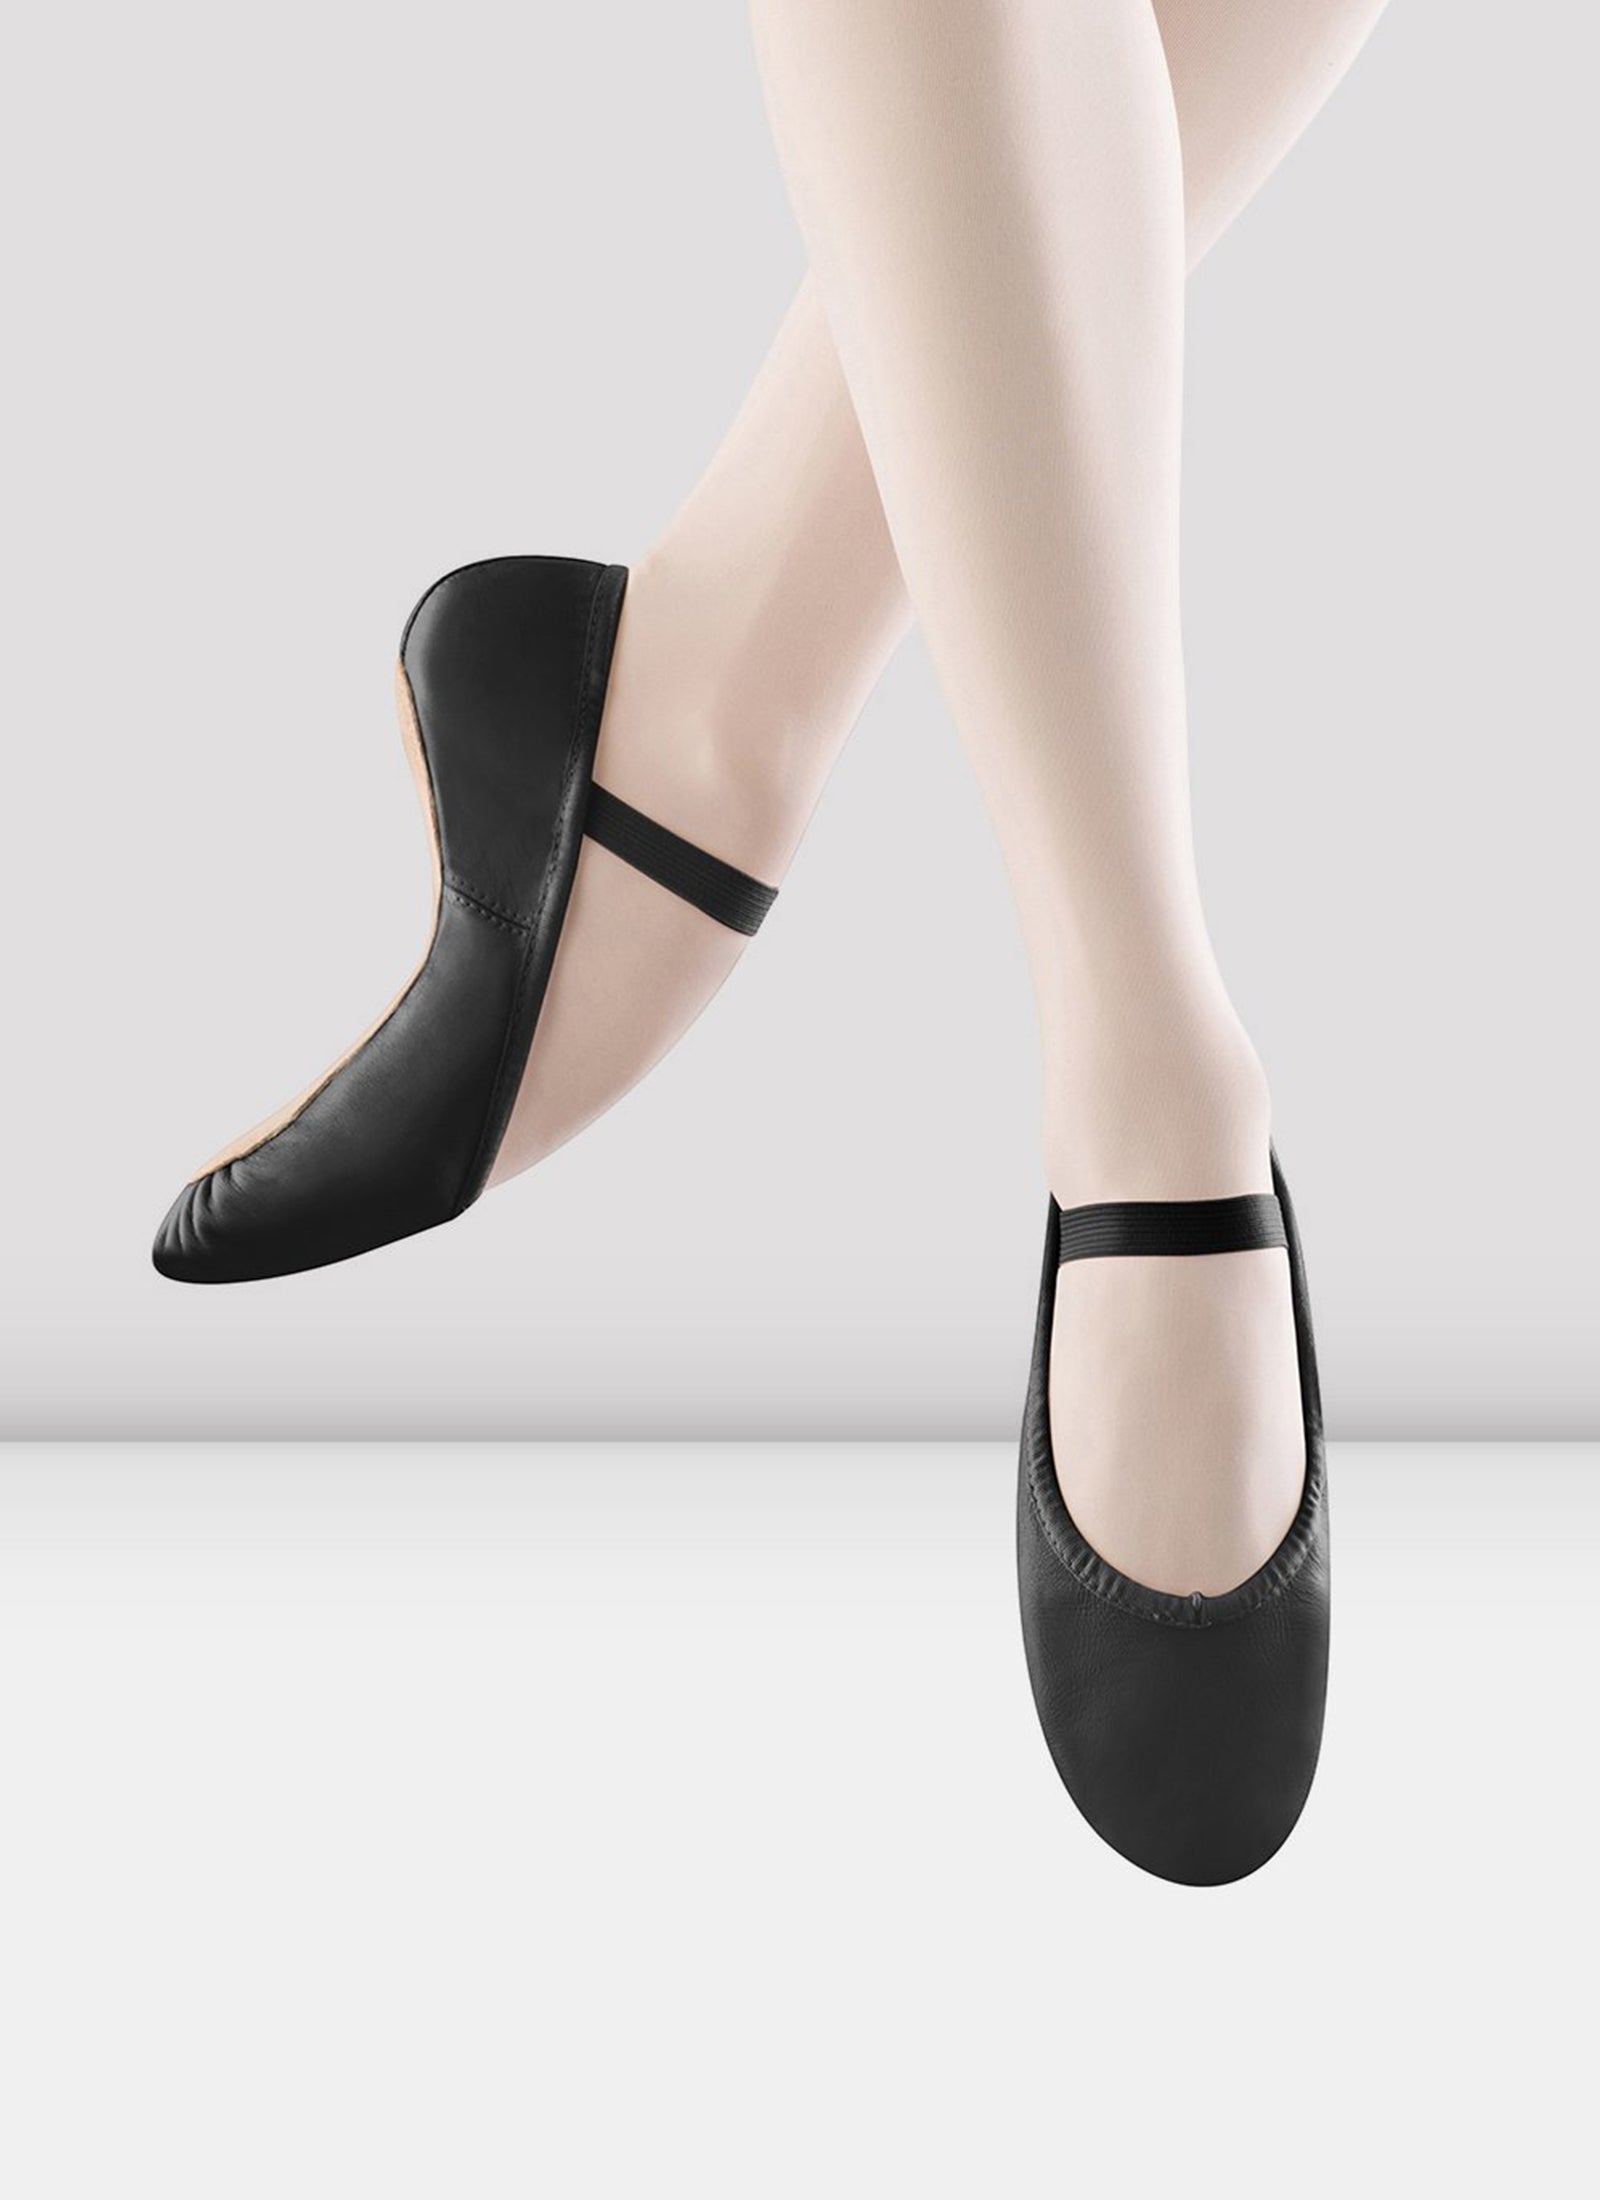 Black Leather Ballet Shoes